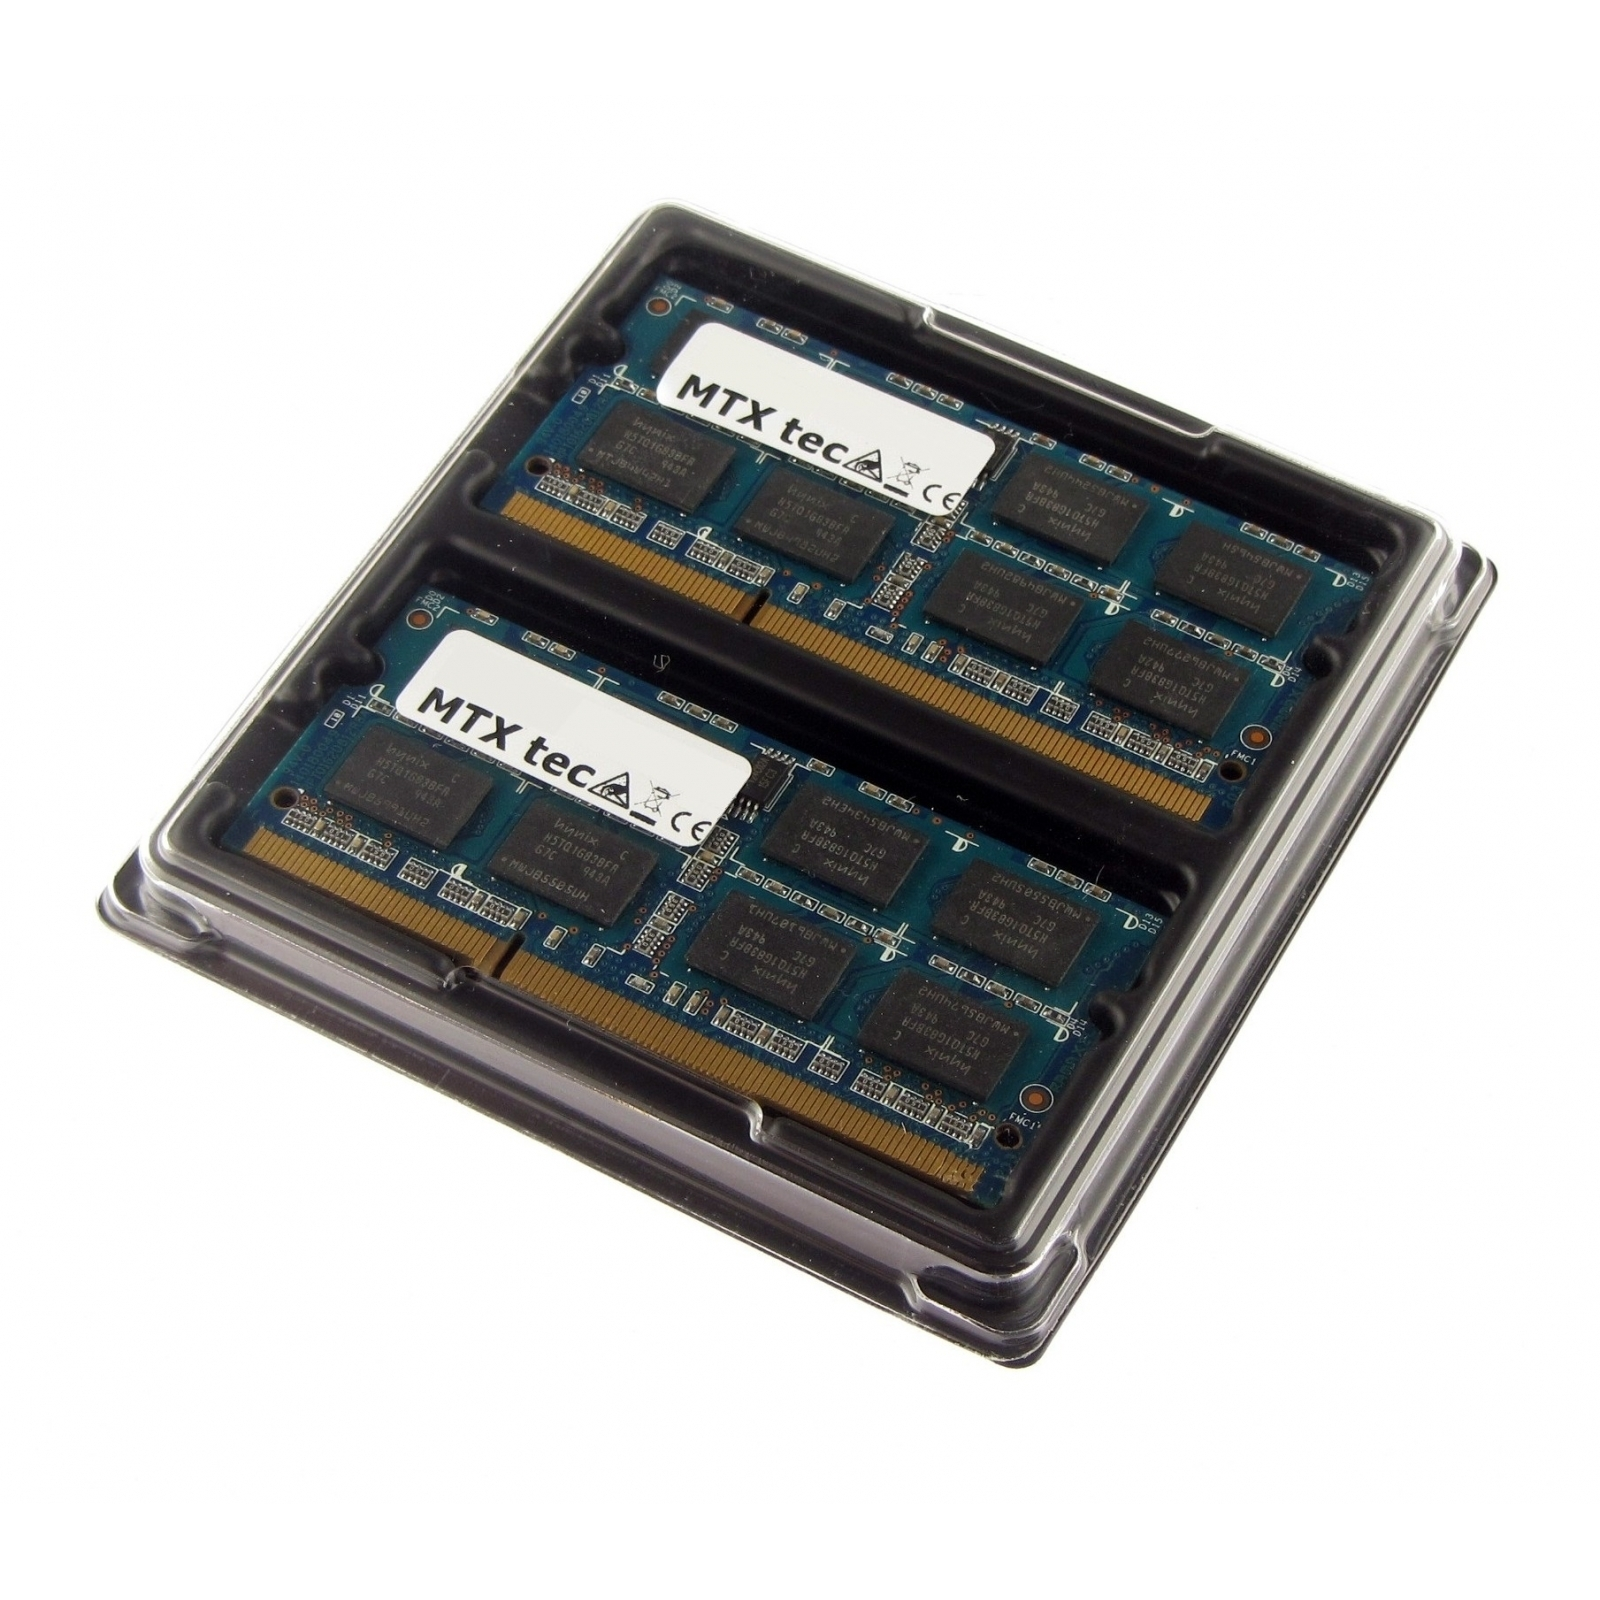 MTXTEC 8GB Kit 2x SODIMM Laptop-Speicher RAM 204 DDR3 Pin 4GB Notebook-Speicher DDR3 GB DDR3 PC3-8500, 1066MHz 4